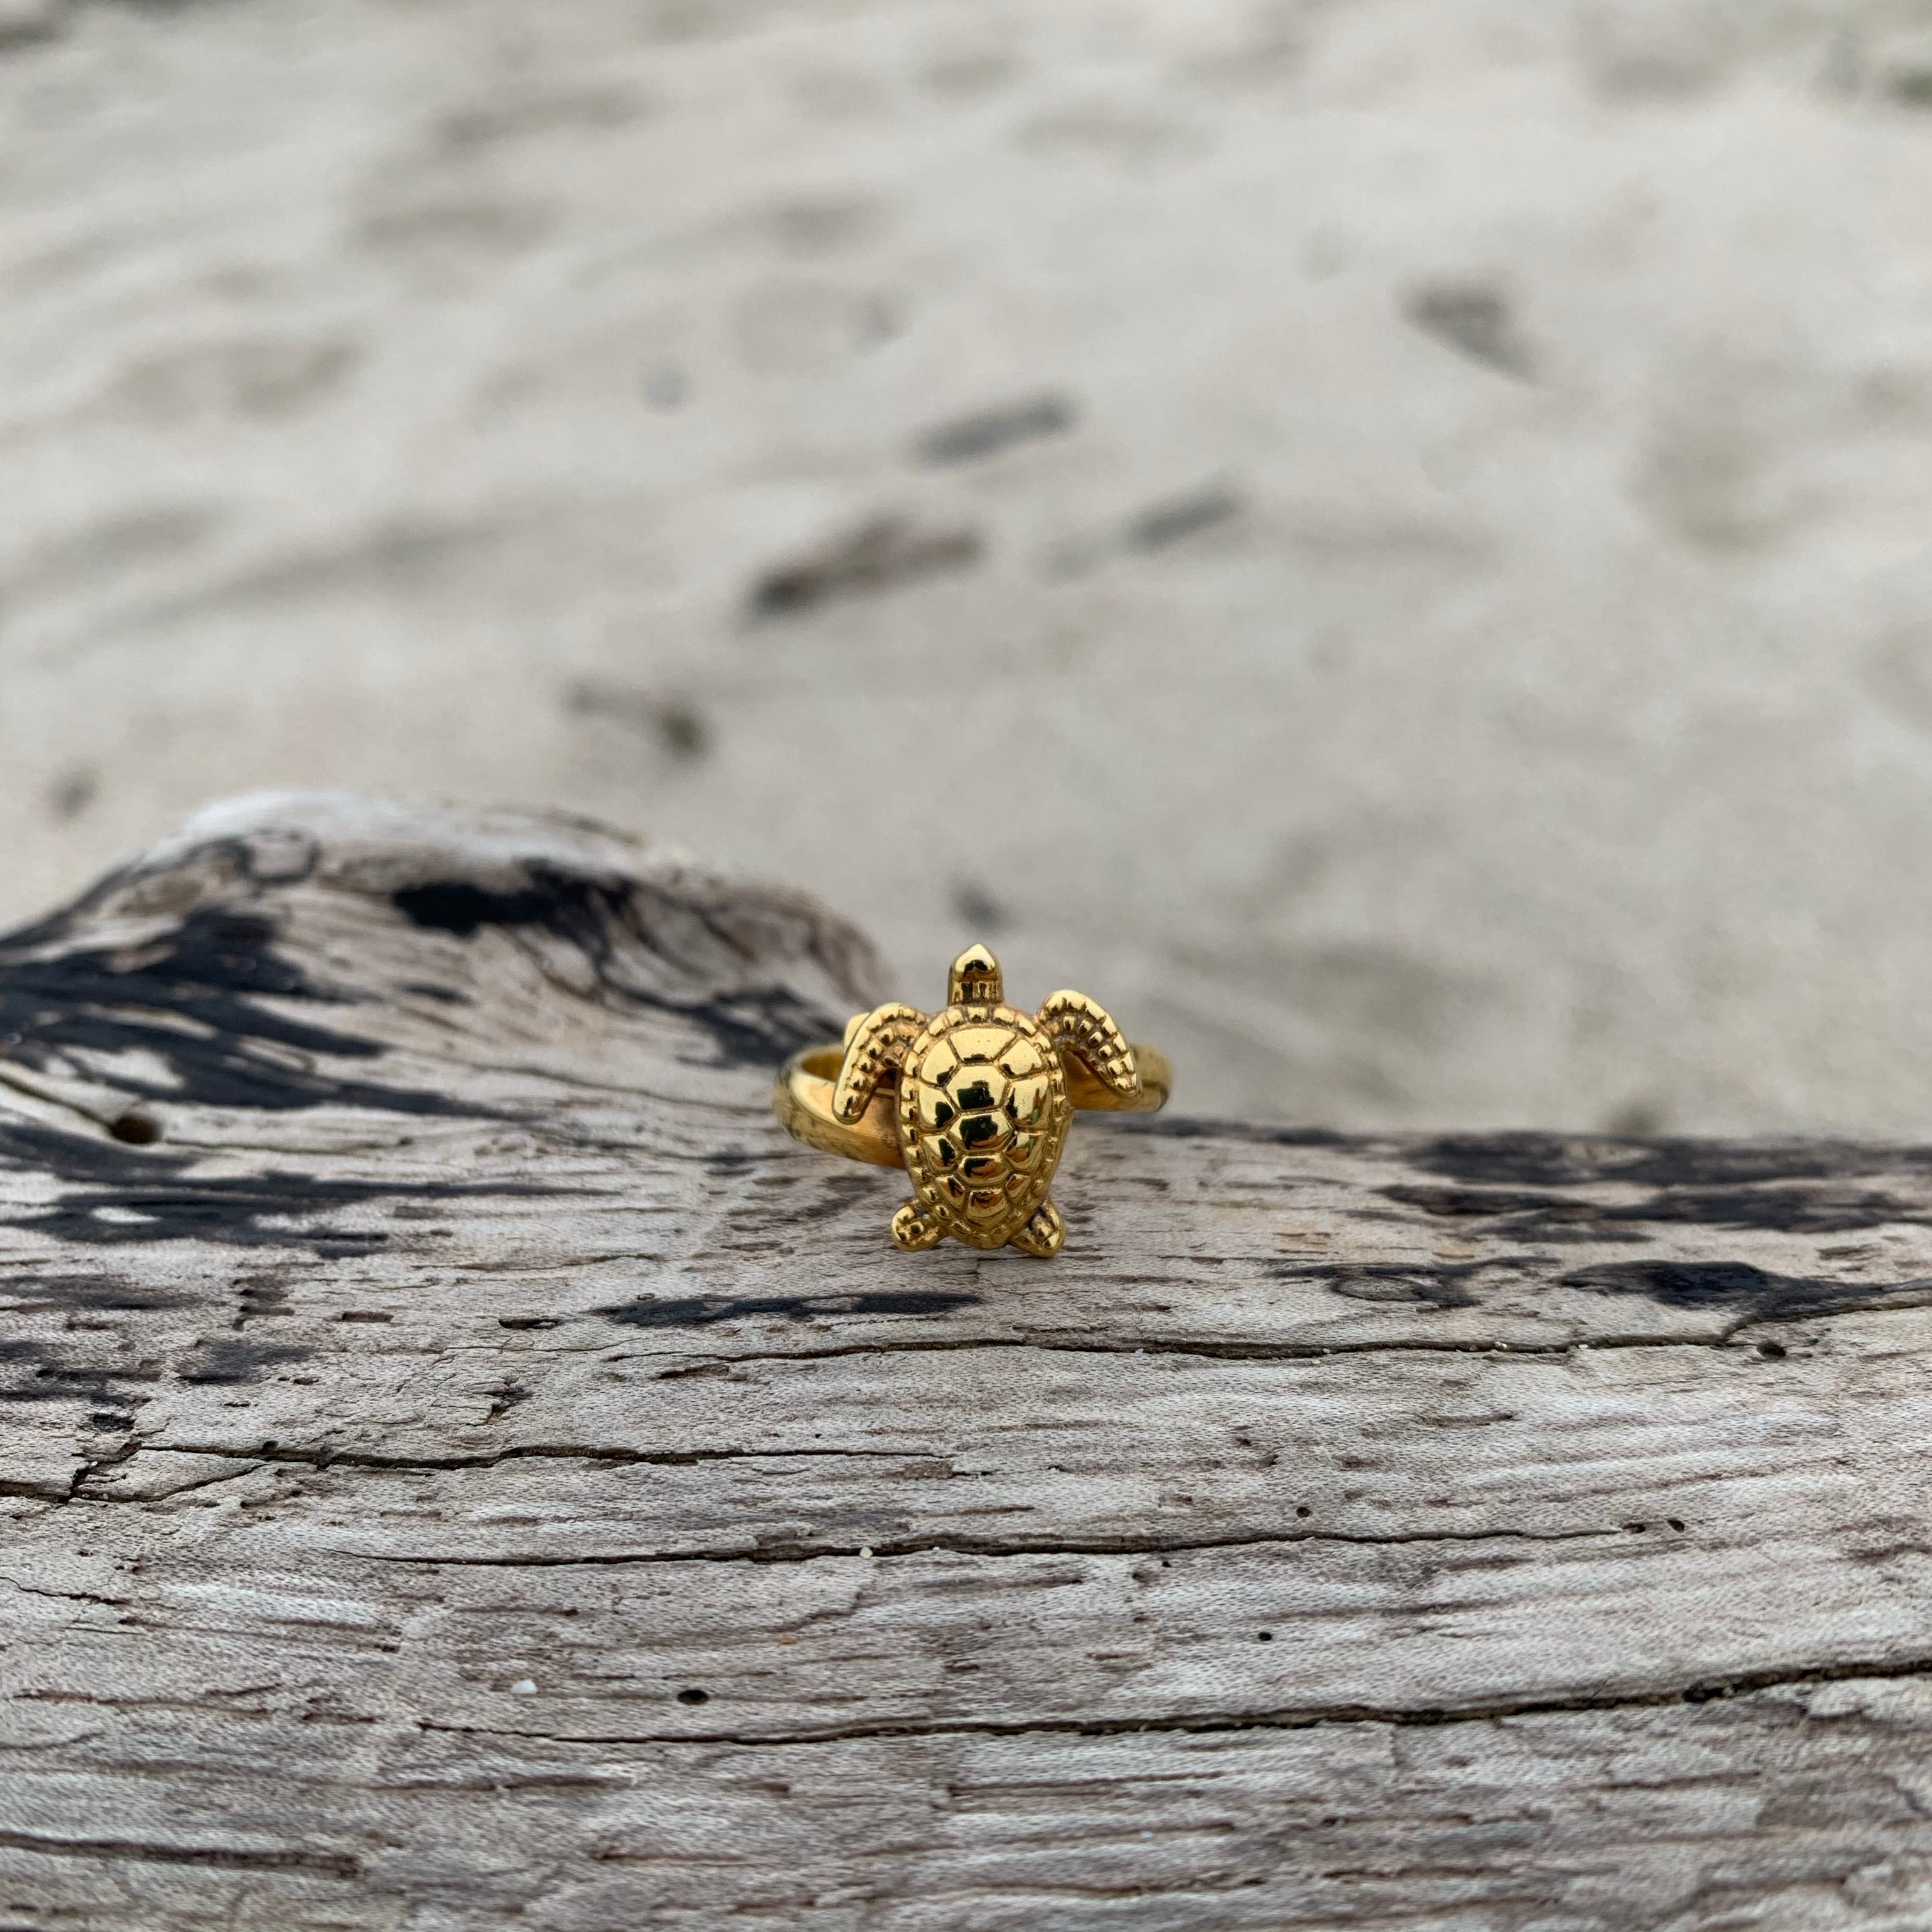 Ring Bronze Sea Turtle-Jenstones Jewelry